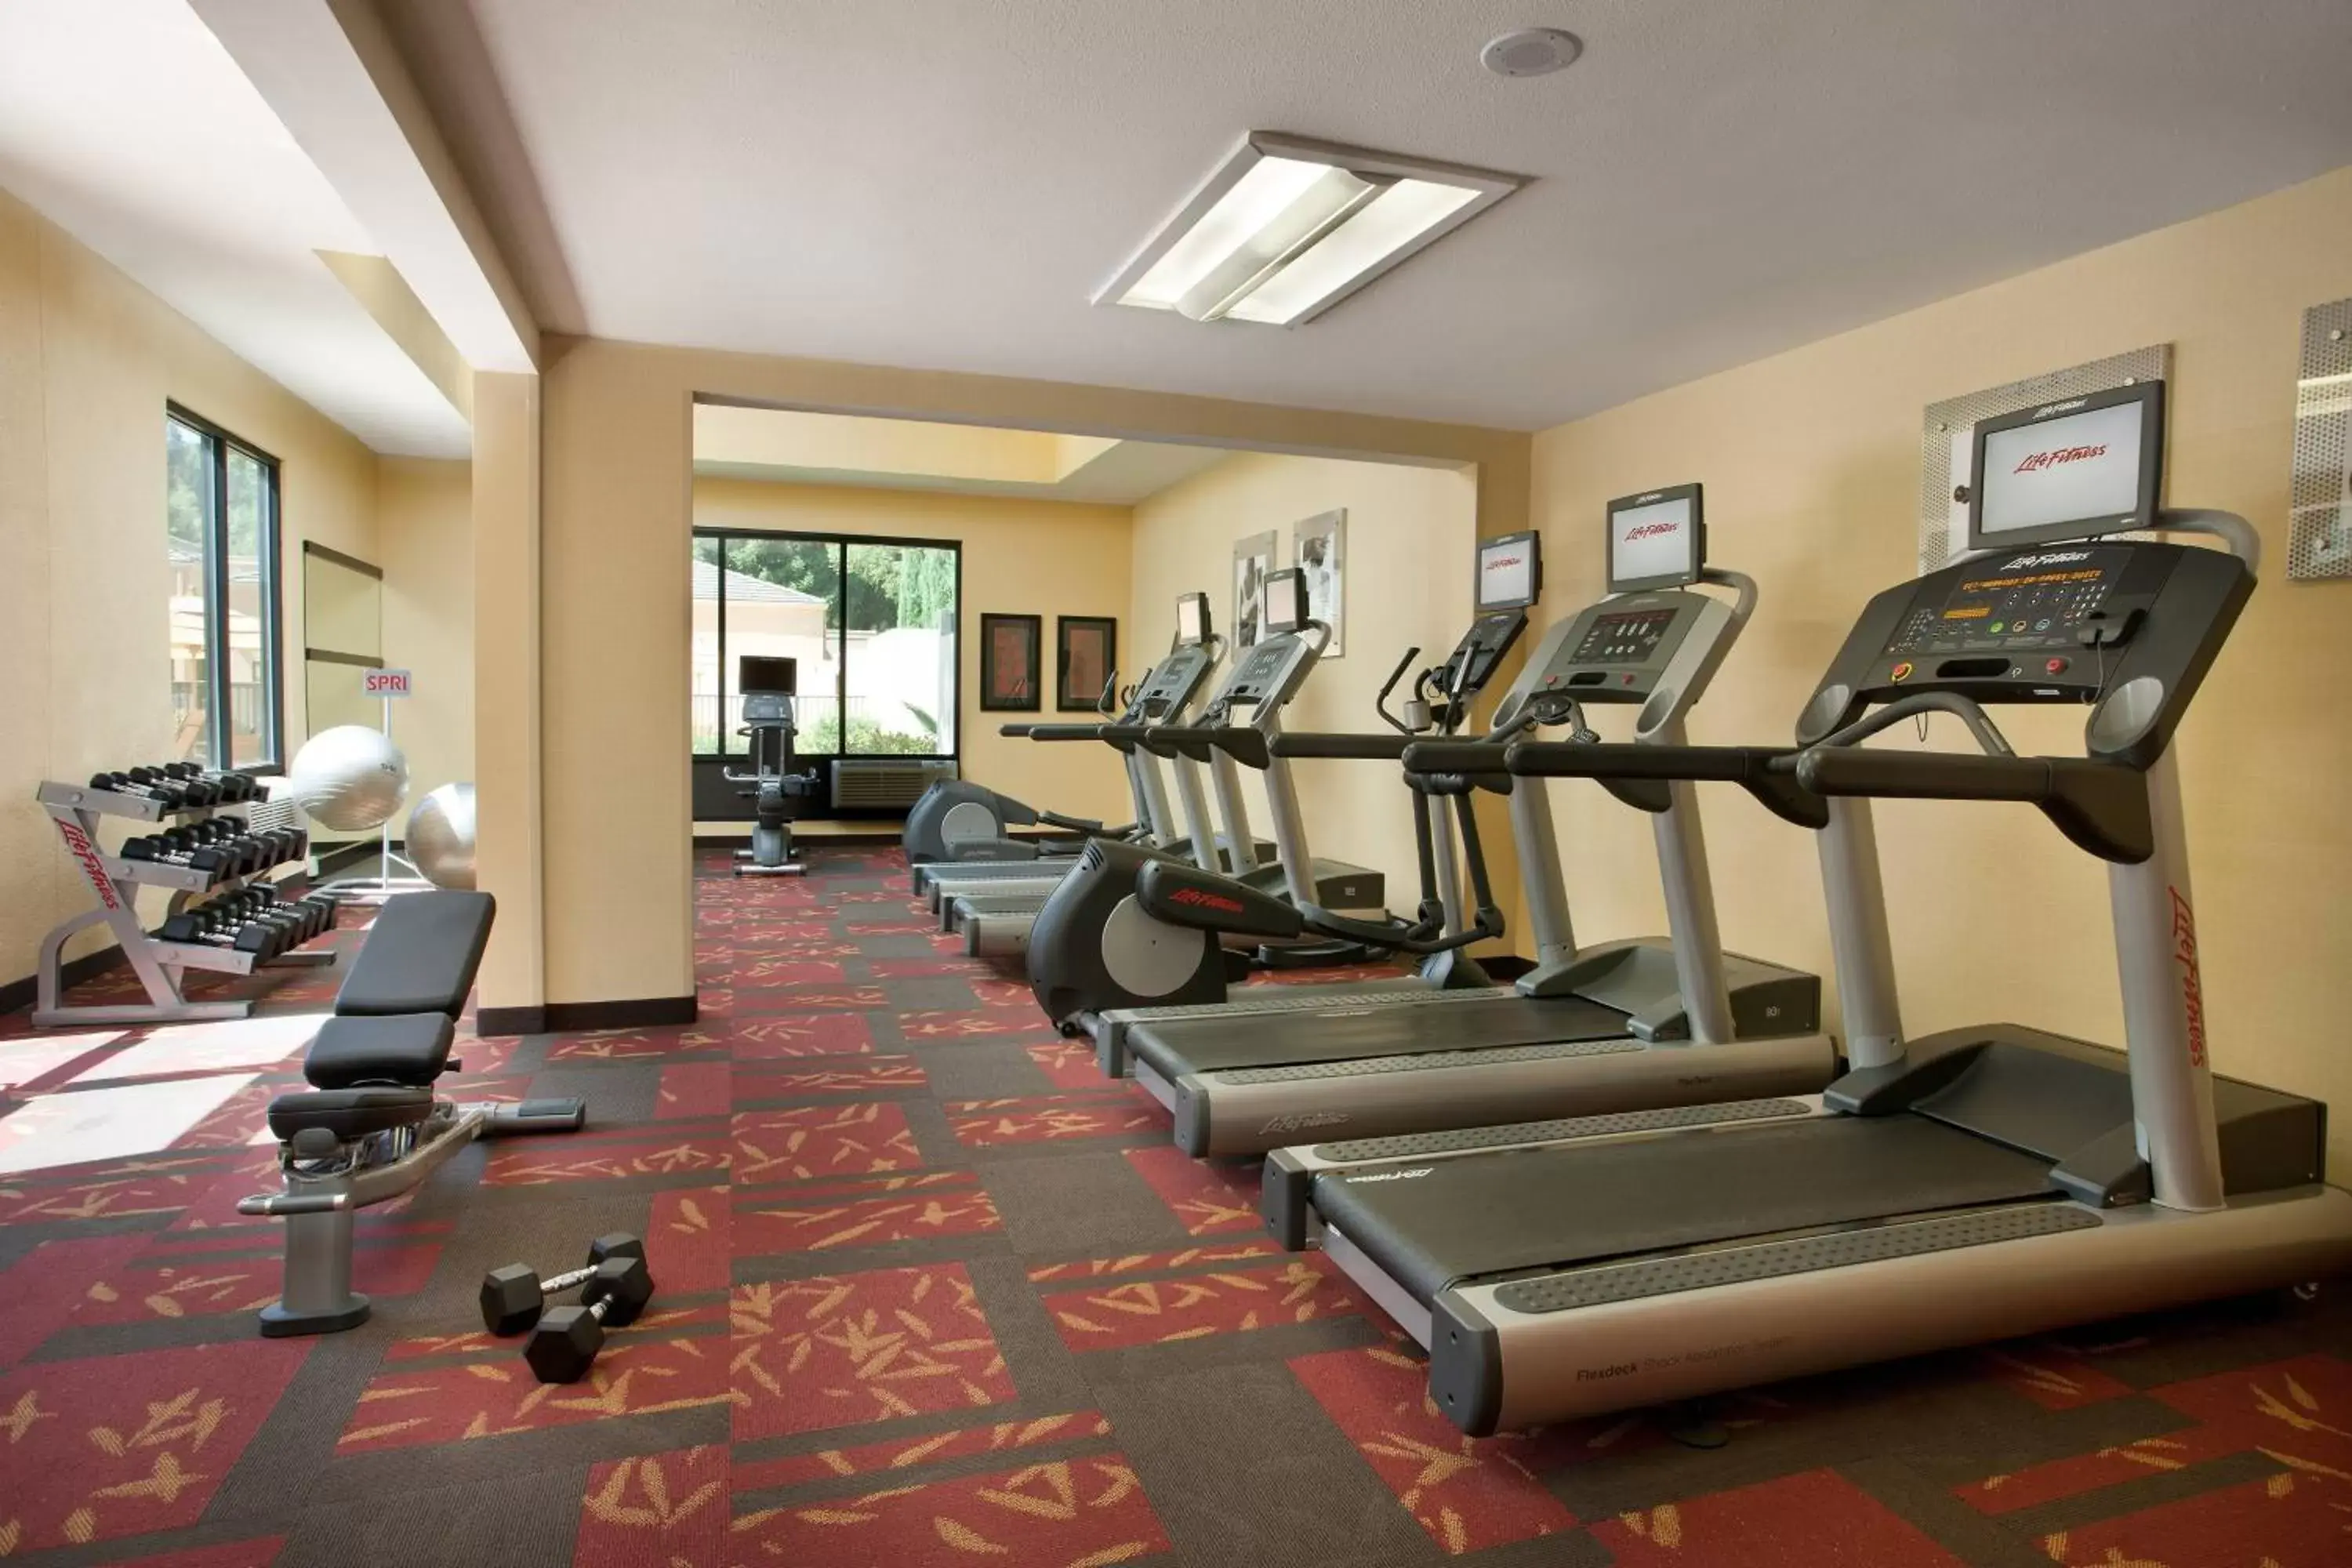 Fitness centre/facilities, Fitness Center/Facilities in Courtyard Sacramento Airport Natomas